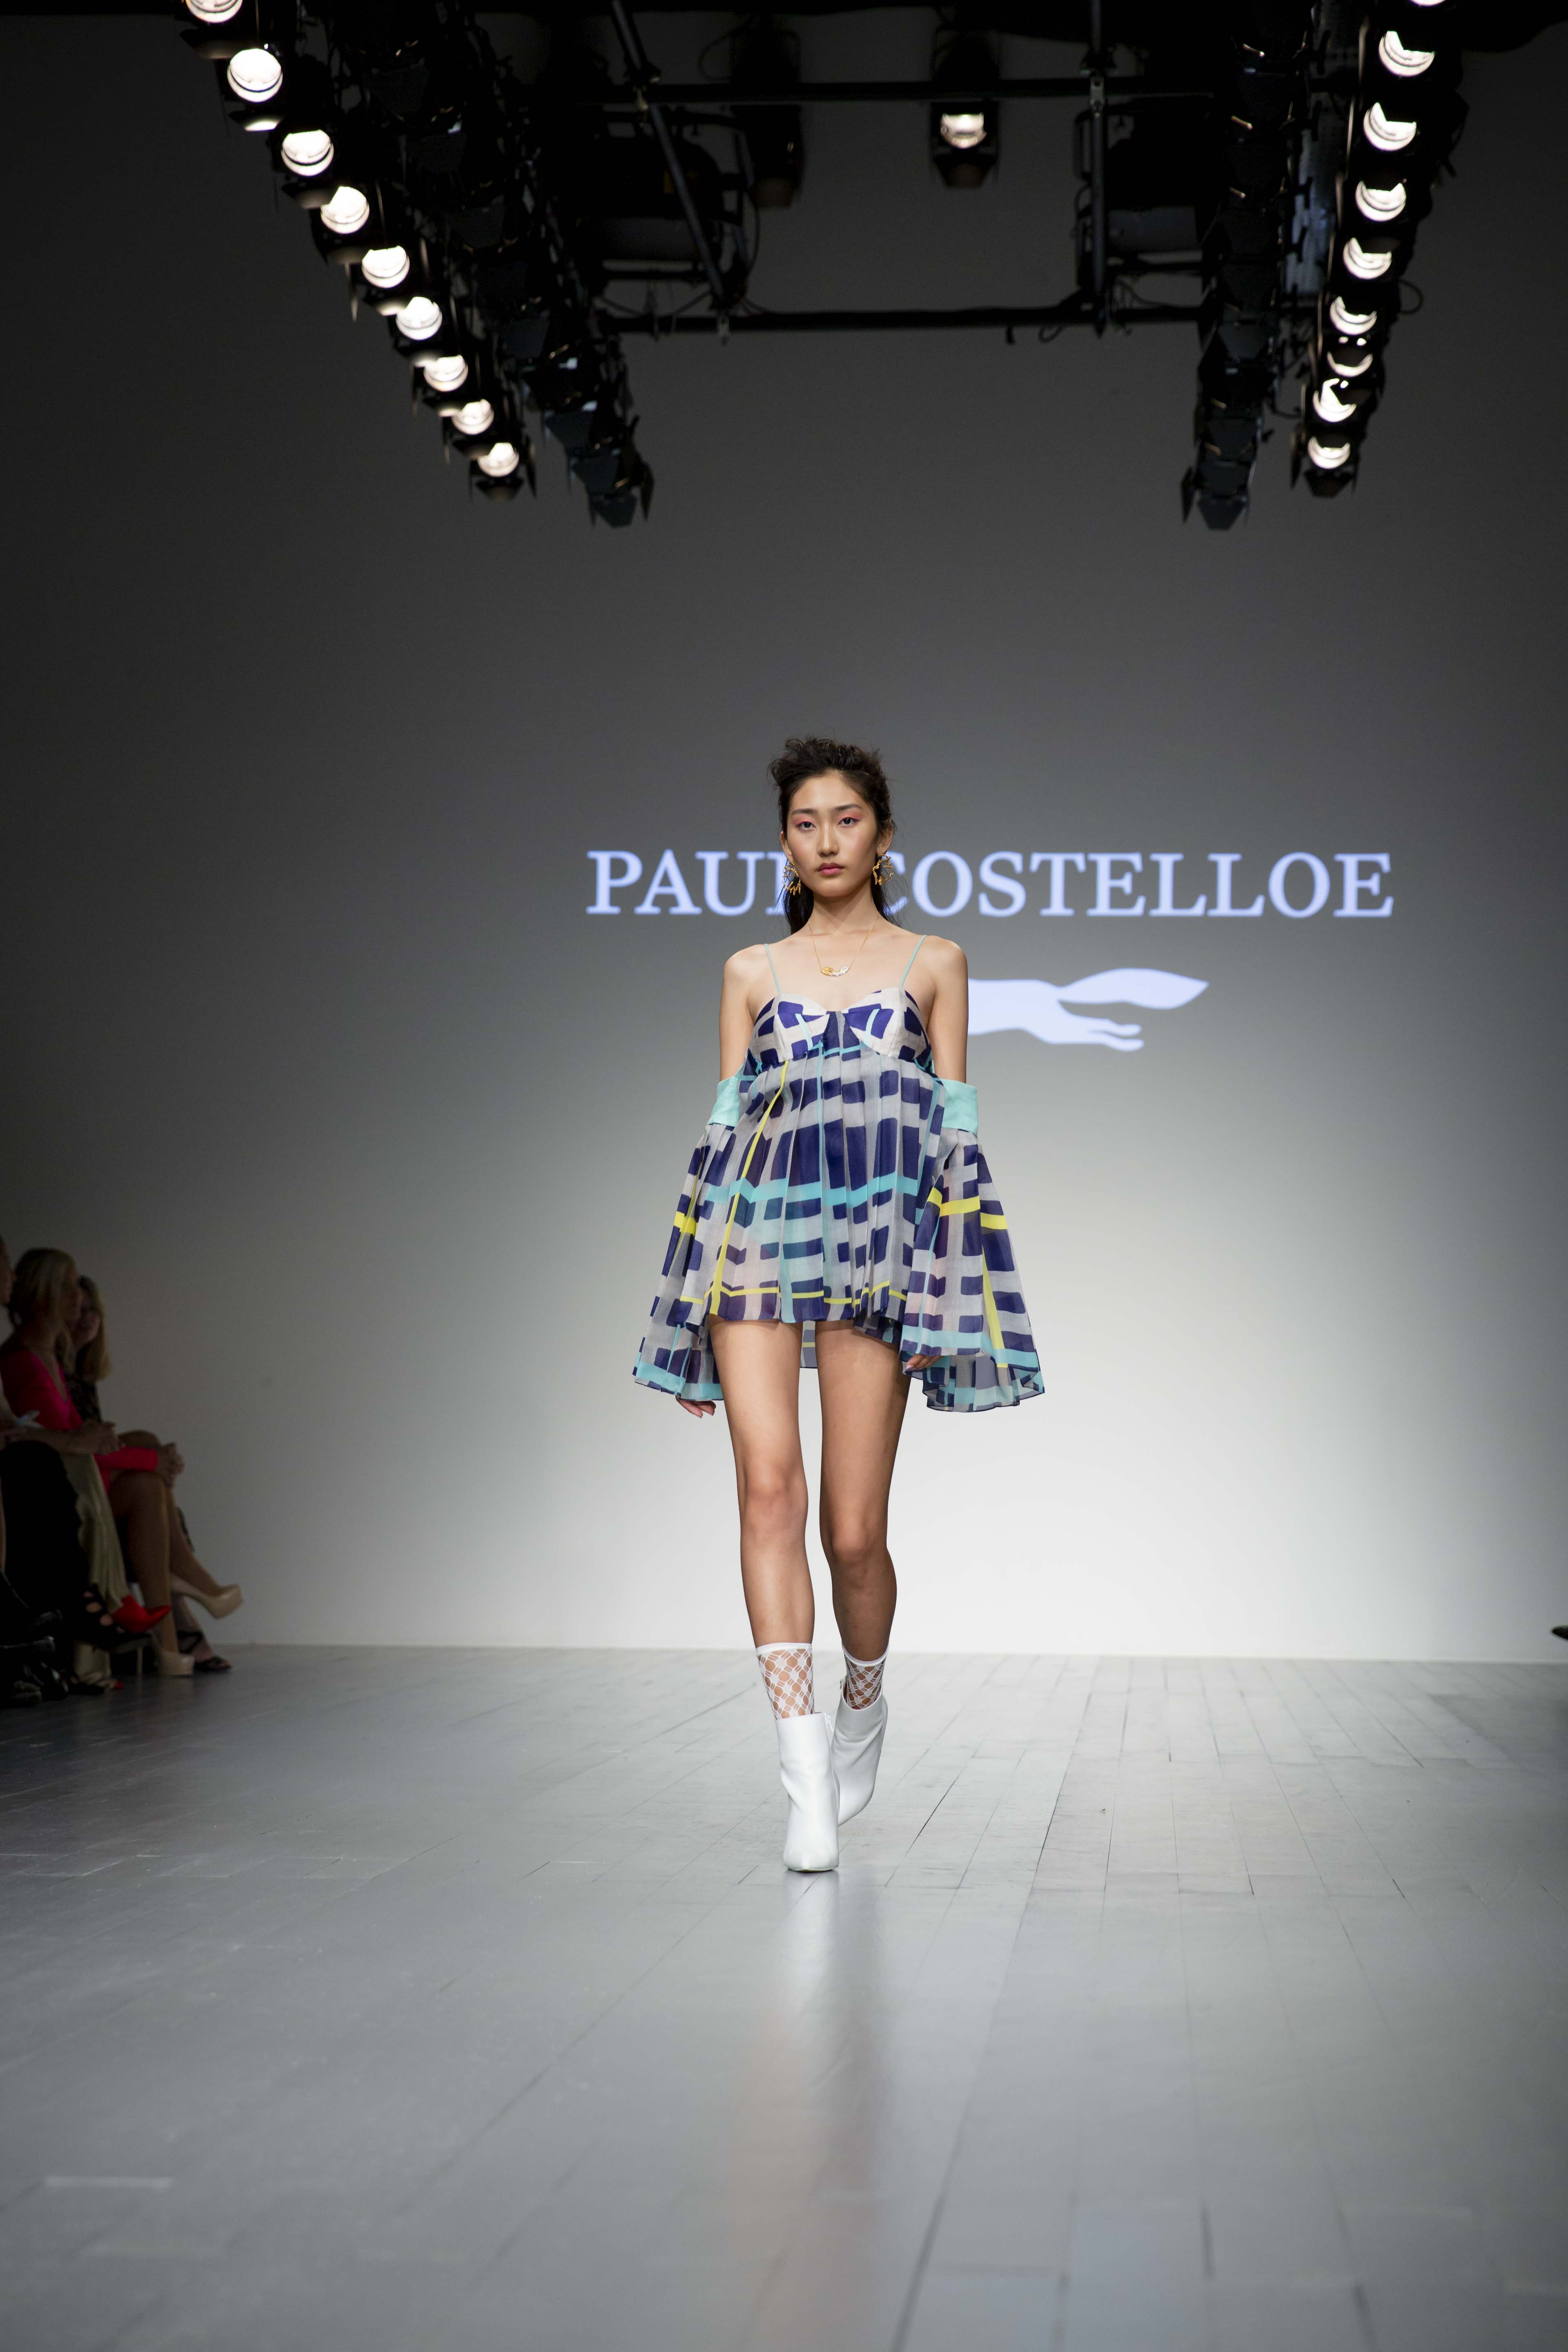 London Fashion week - Paul Costello 